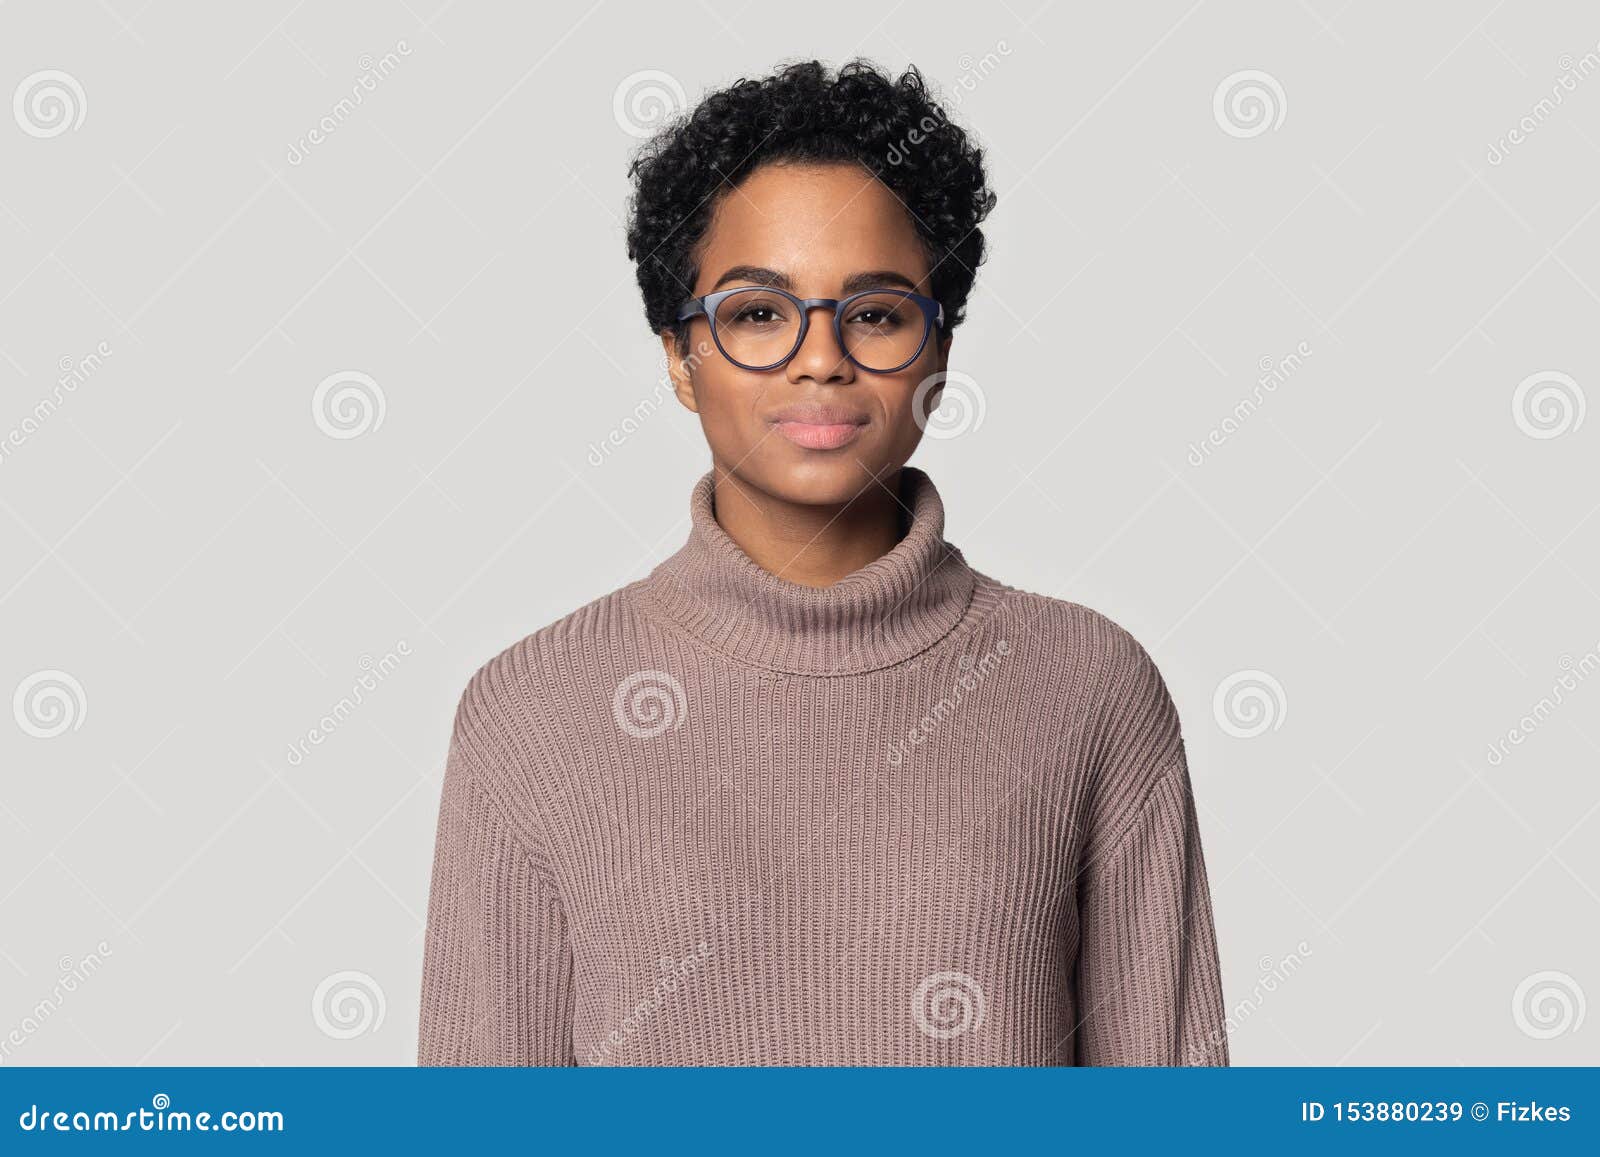 headshot of black woman in glasses posing  in studio